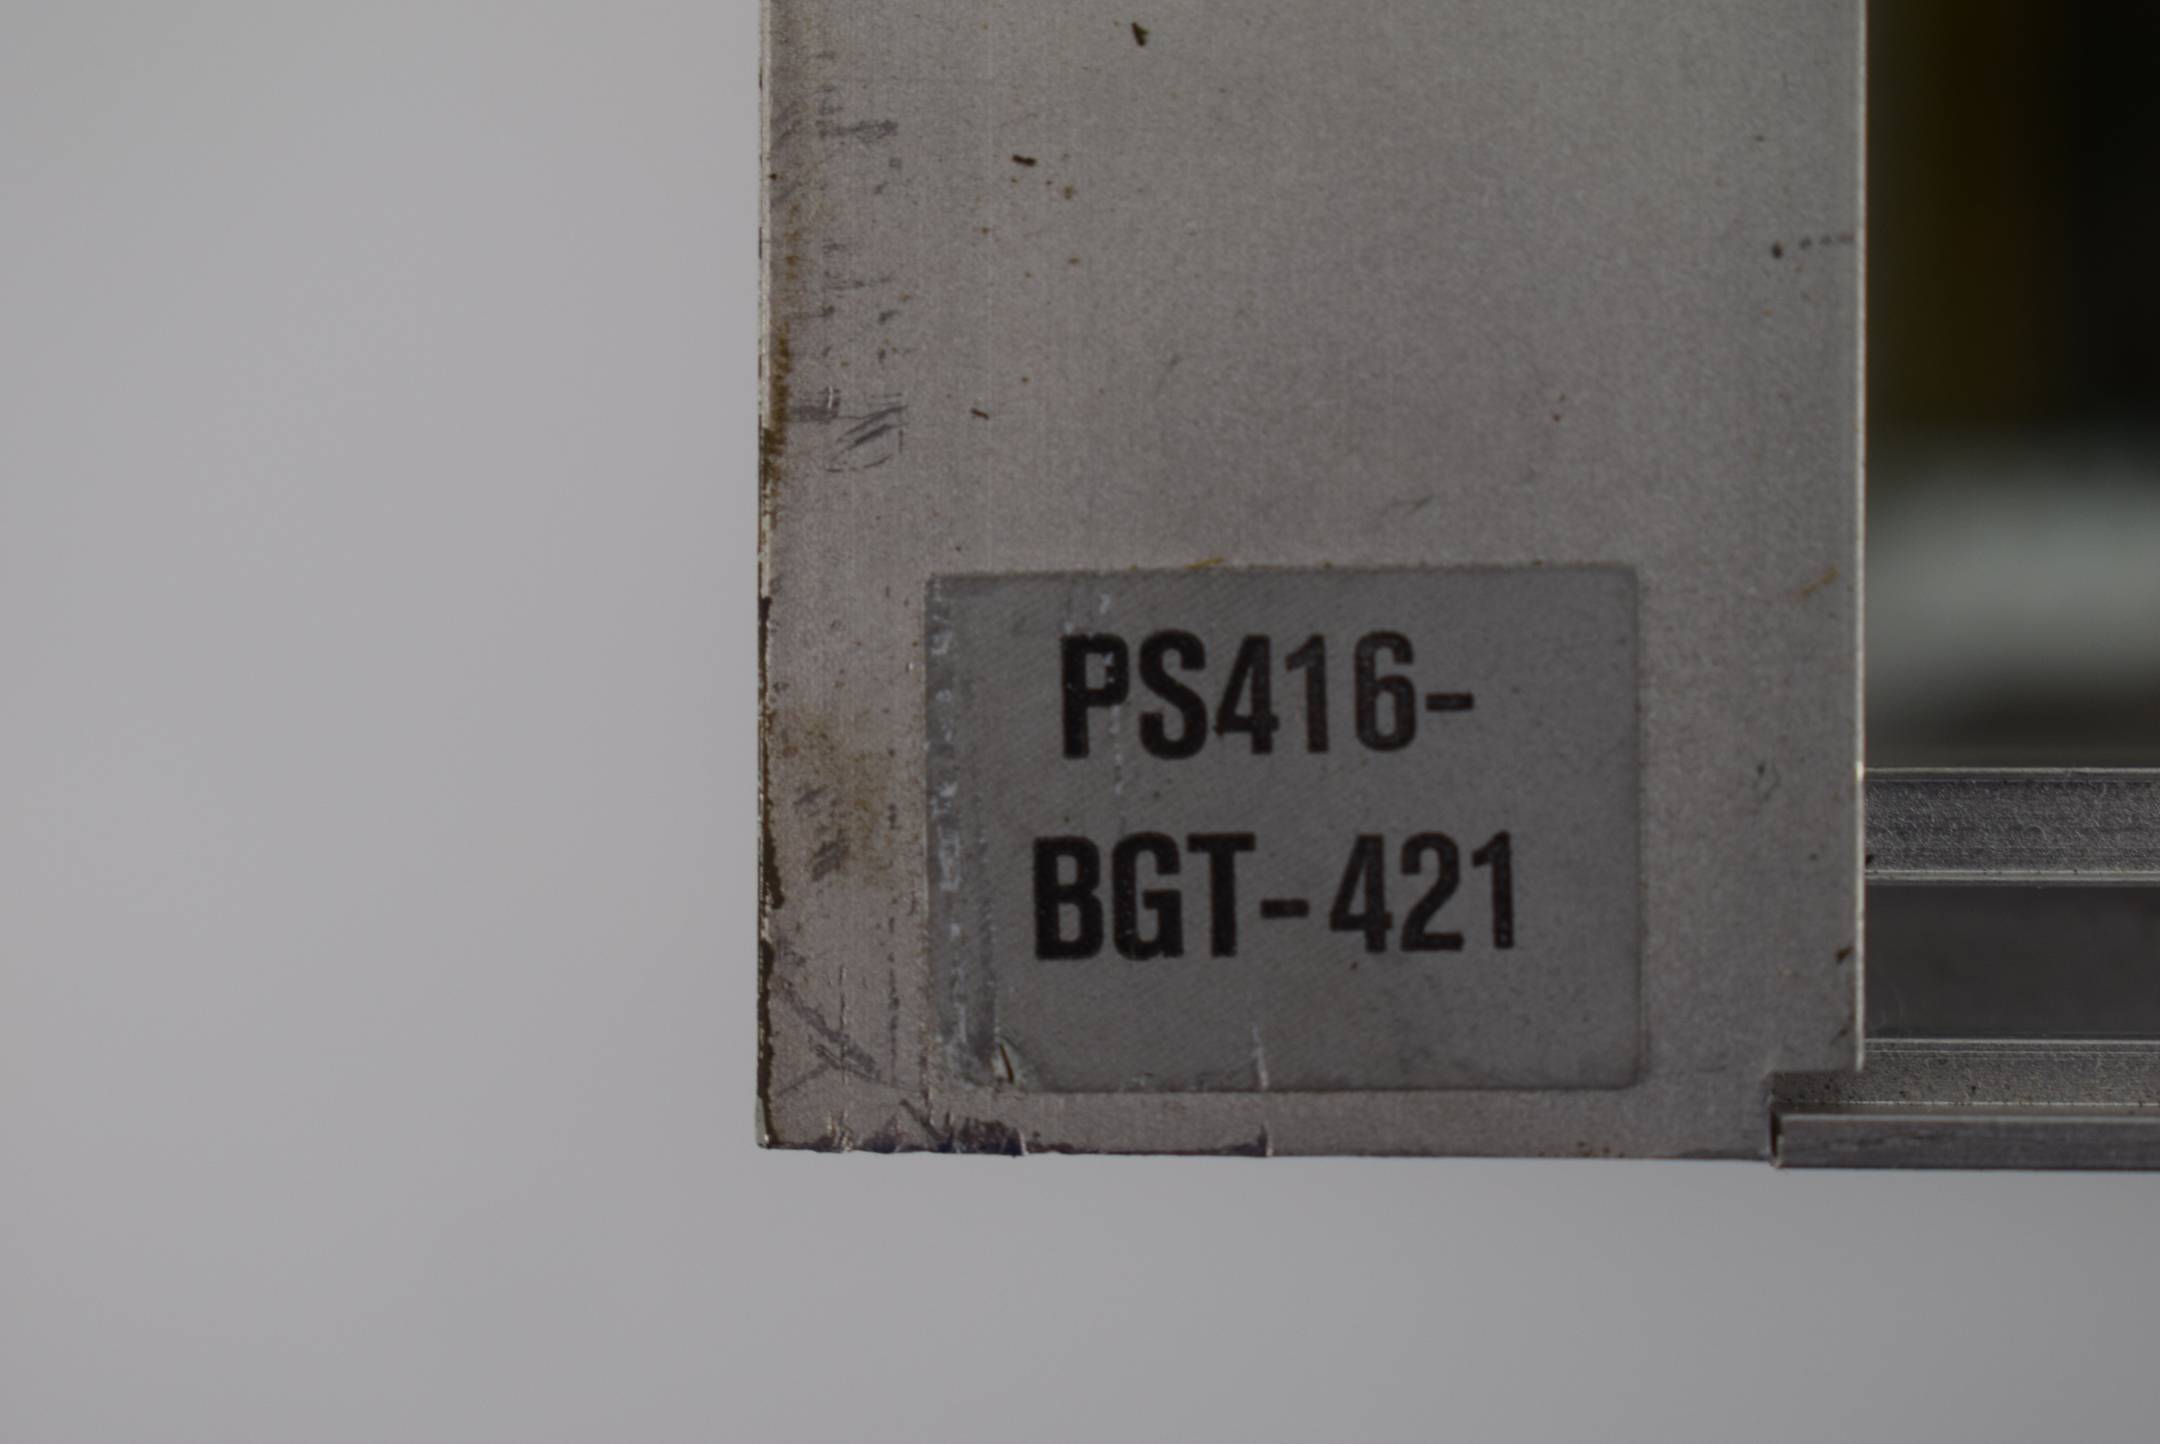 Klockner Moeller PS416-BGT-421